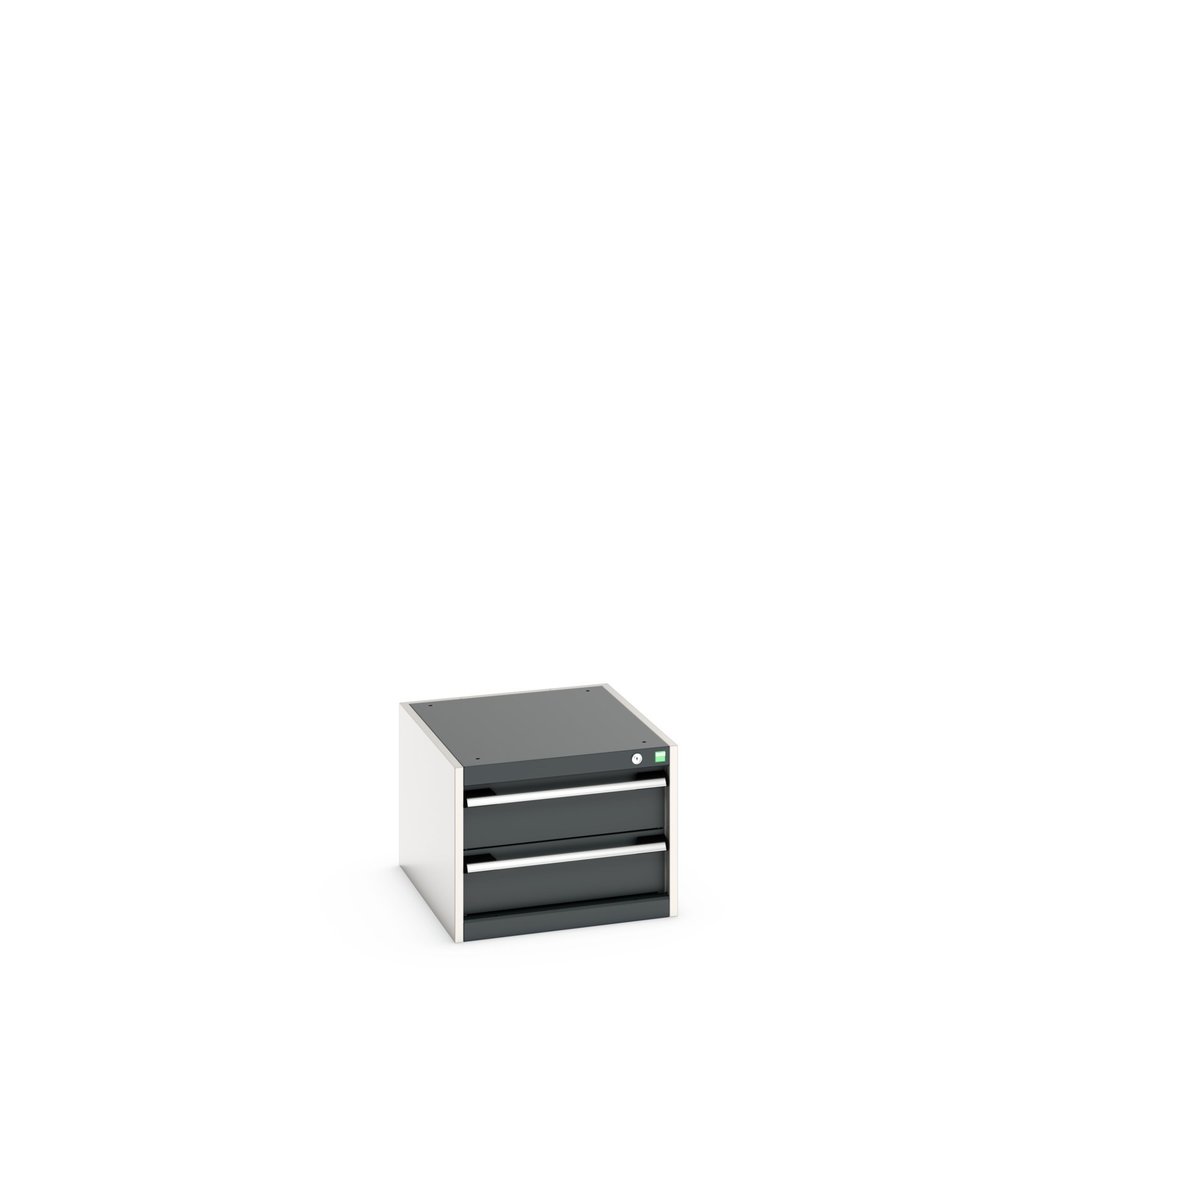 40018005. - cubio drawer cabinet